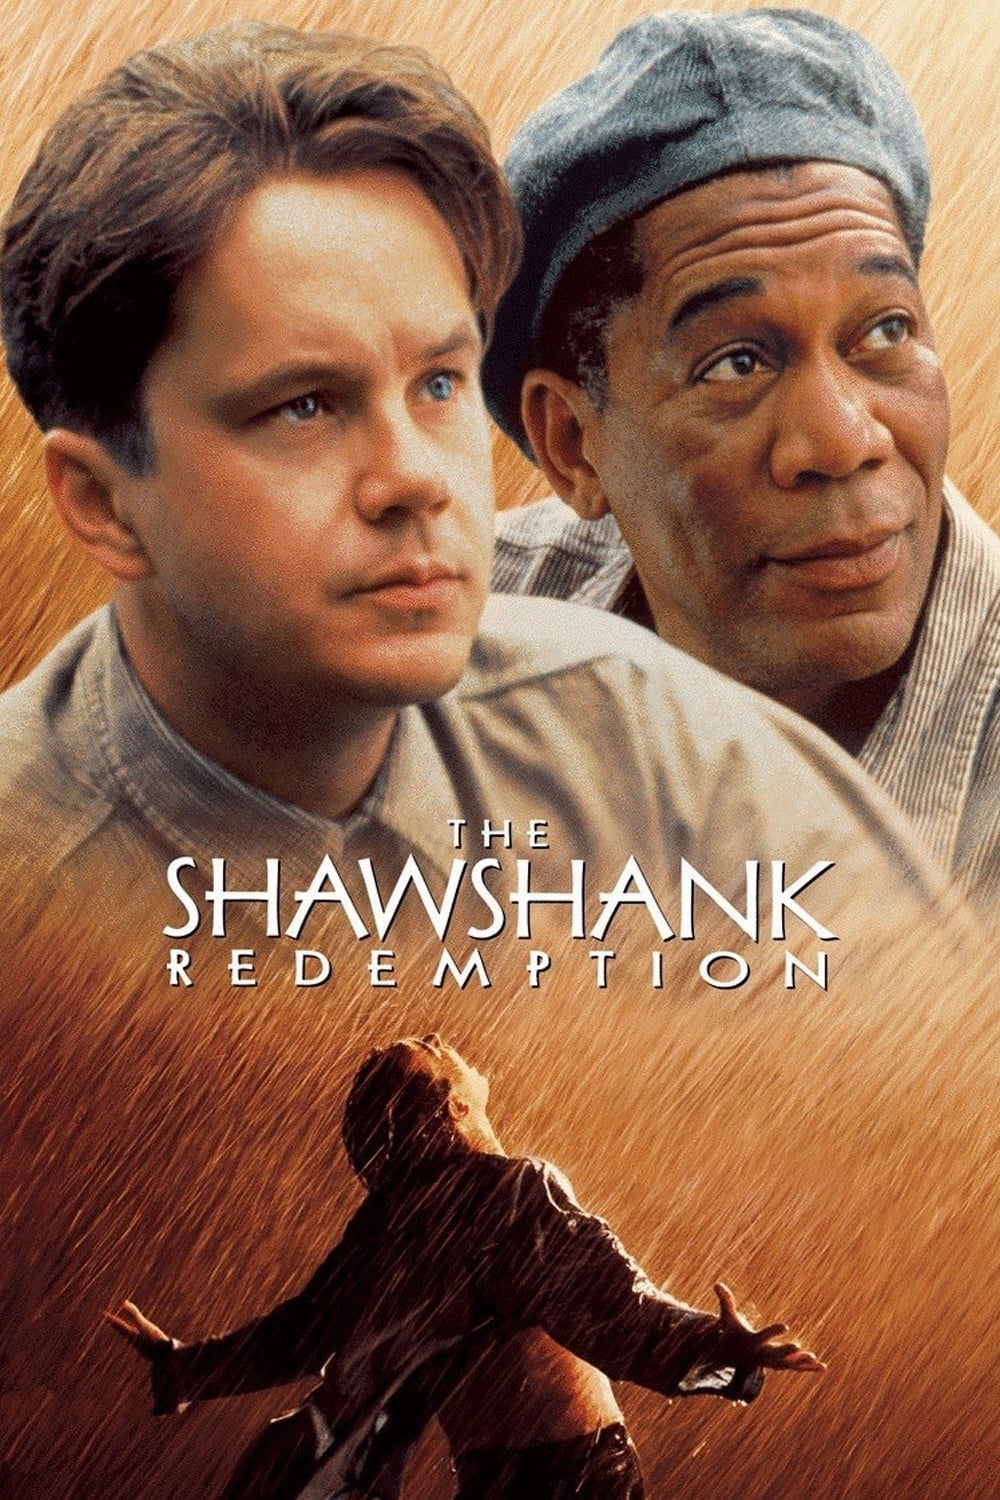 The Shawshank Redemption 1994 Bangla Subtitle Download – দ্যা শশাঙ্ক রিডেম্পশন (১৯৯৪)